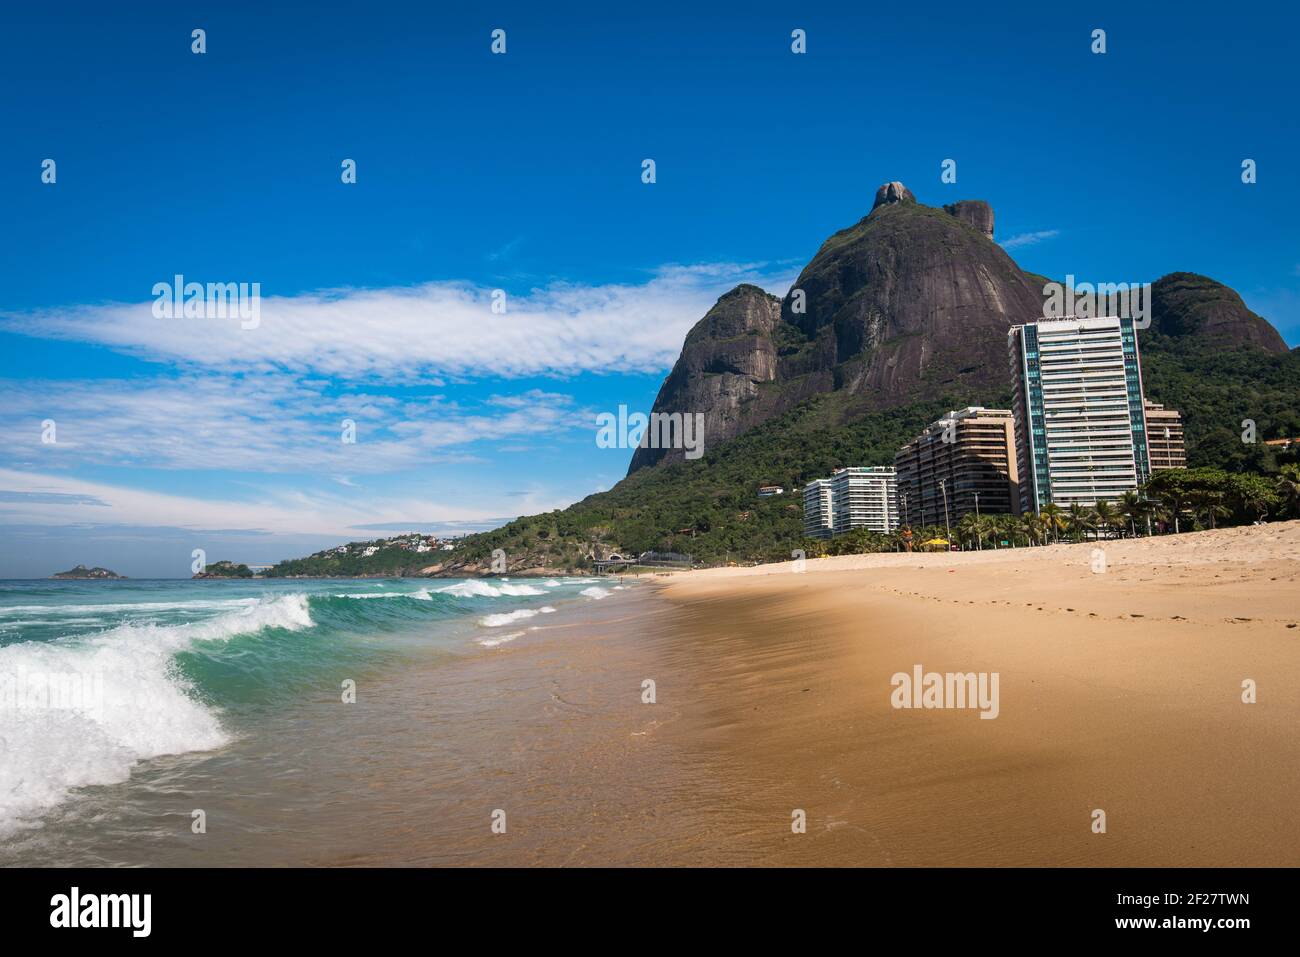 Beautiful Sao Conrado Beach View With Mountain Landscape and Luxury Apartment Buildings Stock Photo